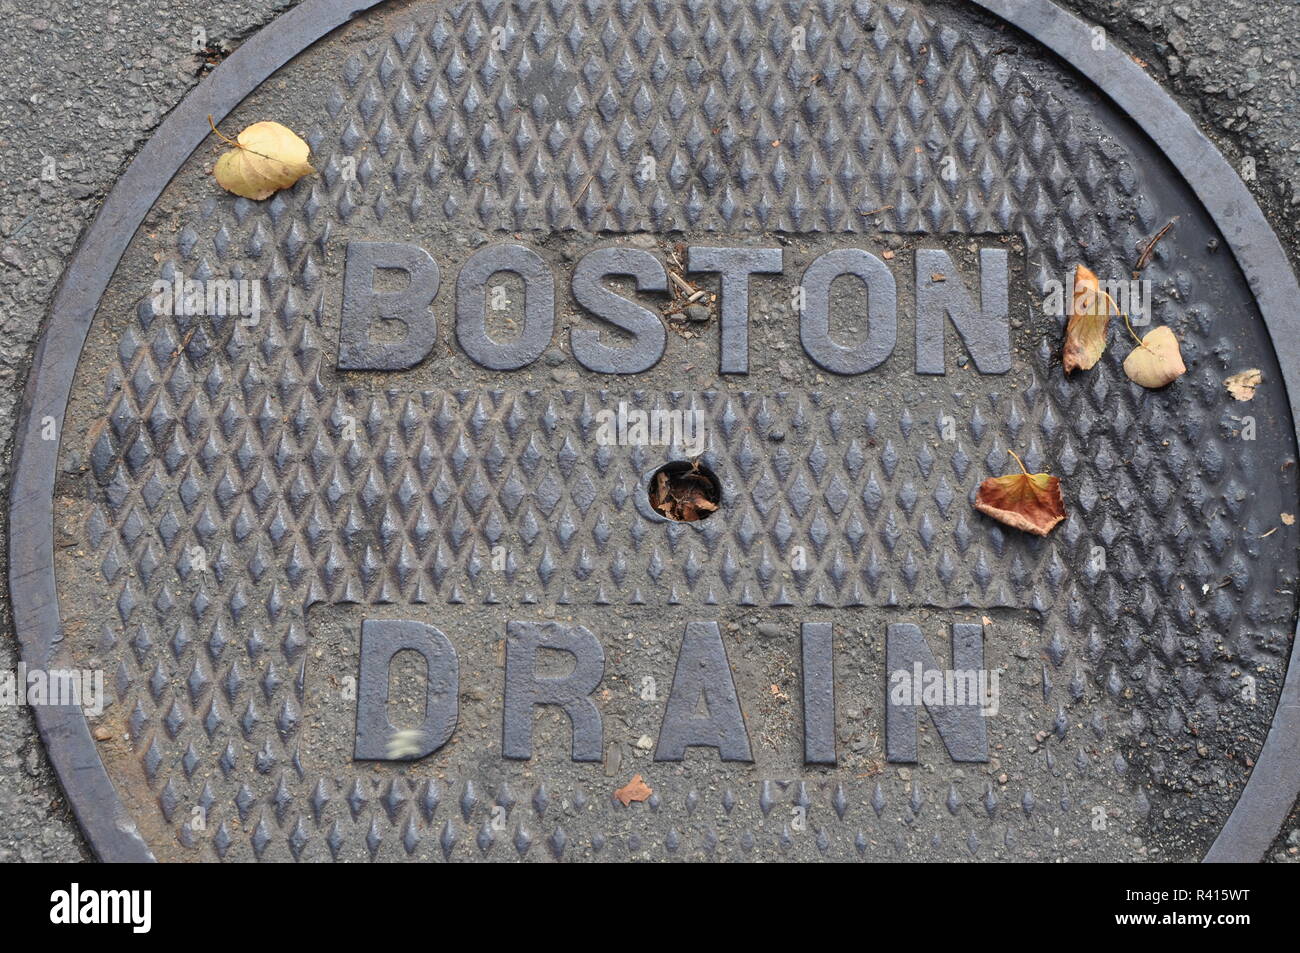 usa,boston - manhole cover of the sewage system Stock Photo